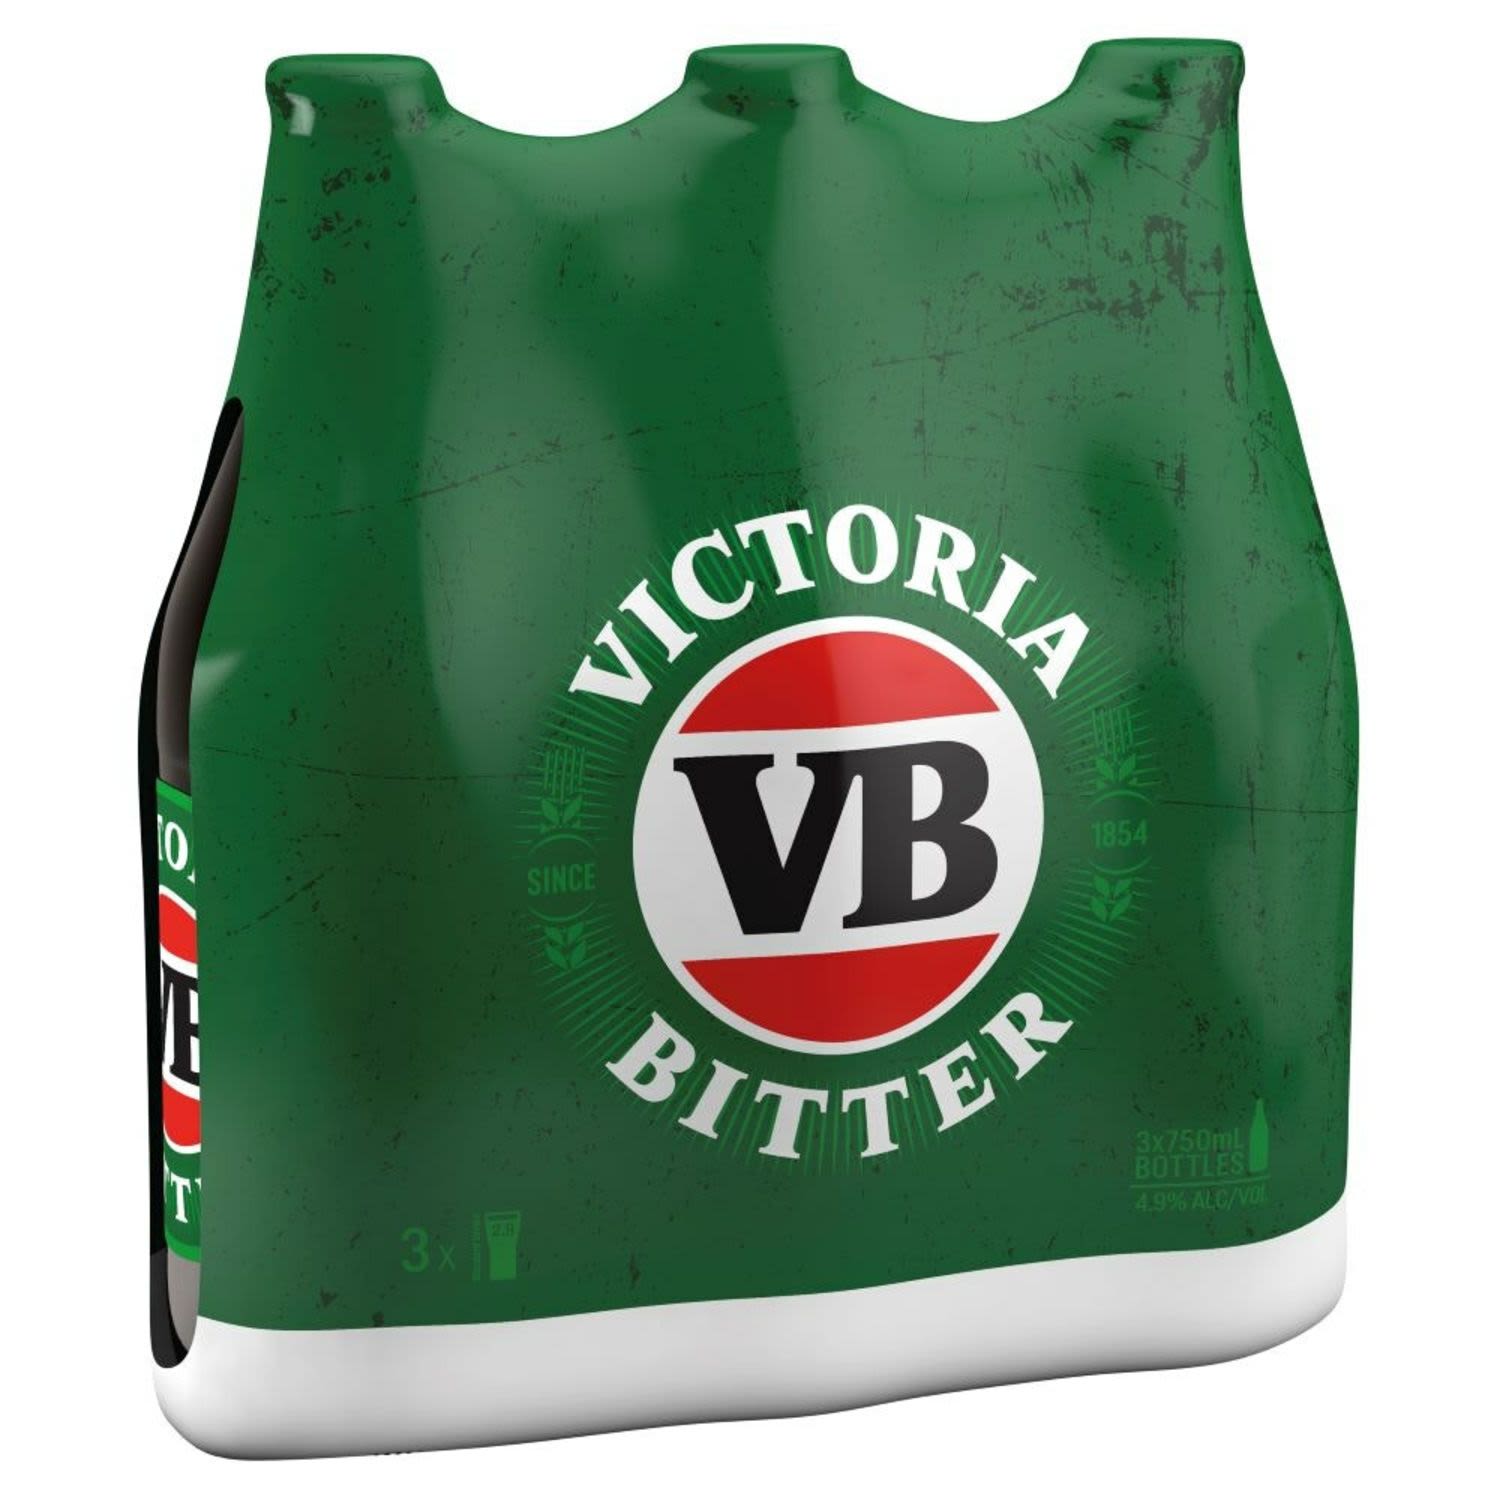 Victoria Bitter Bottle 750mL 3 Pack